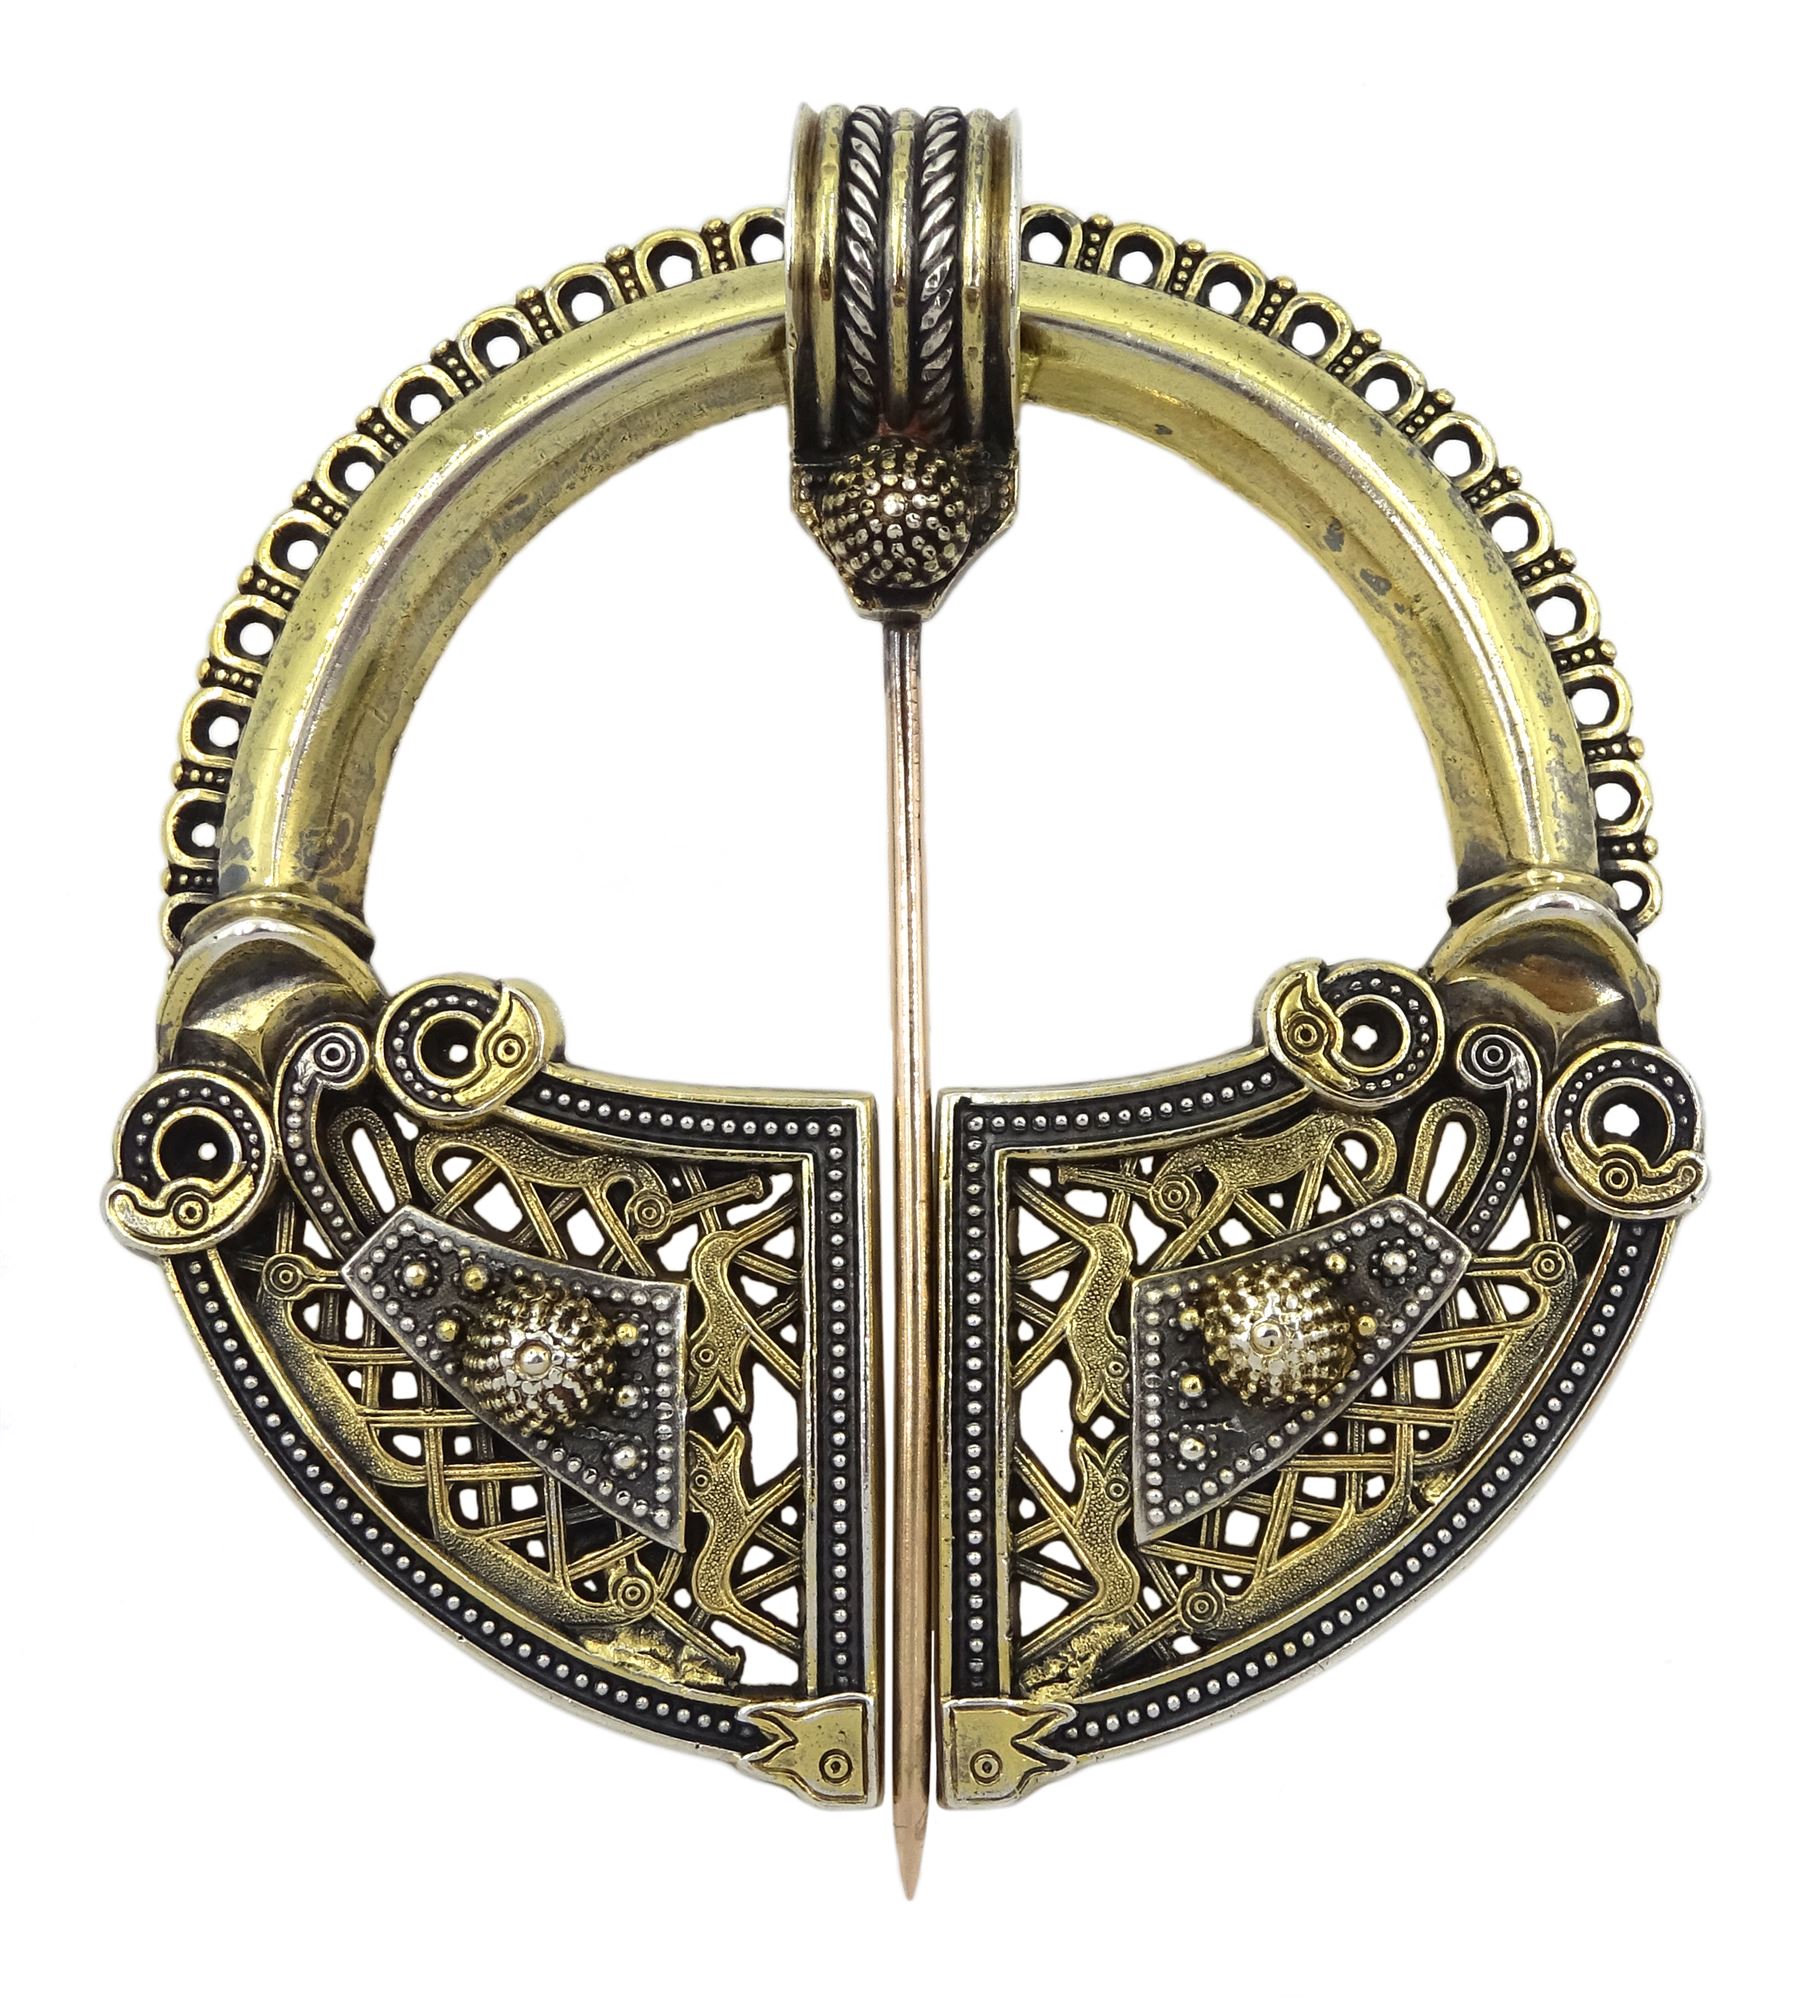 19th century Irish silver-gilt and gold Celtic Revival Tara brooch by Waterhouse & Company Dublin